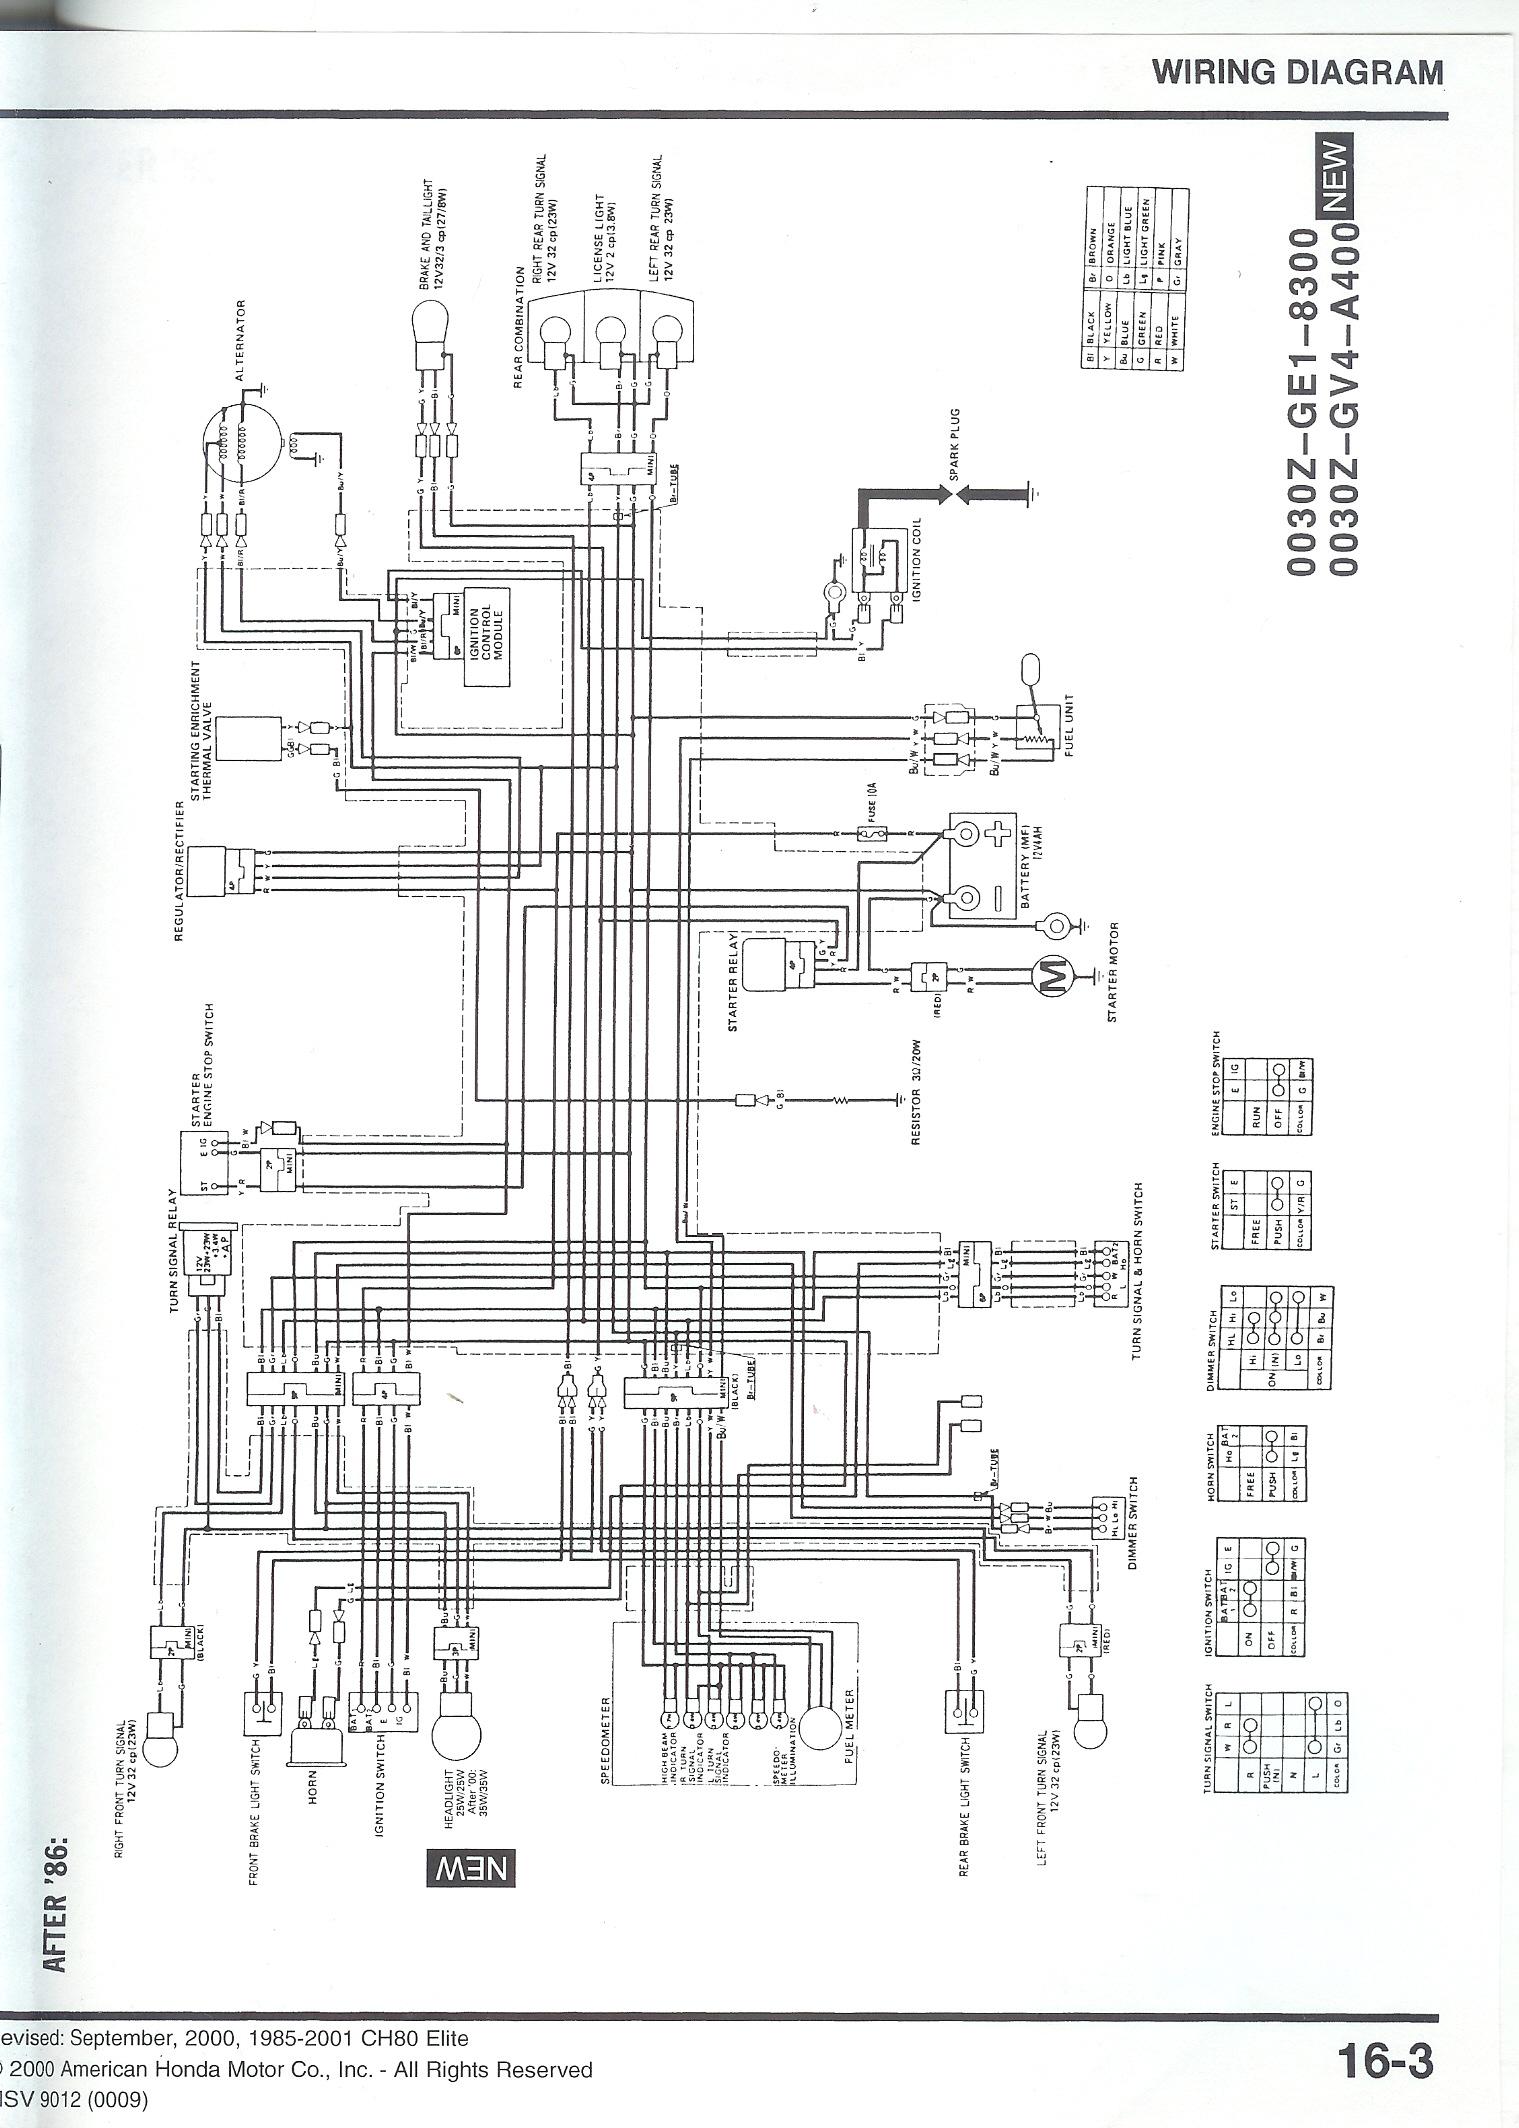 Honda moped wiring diagram #6